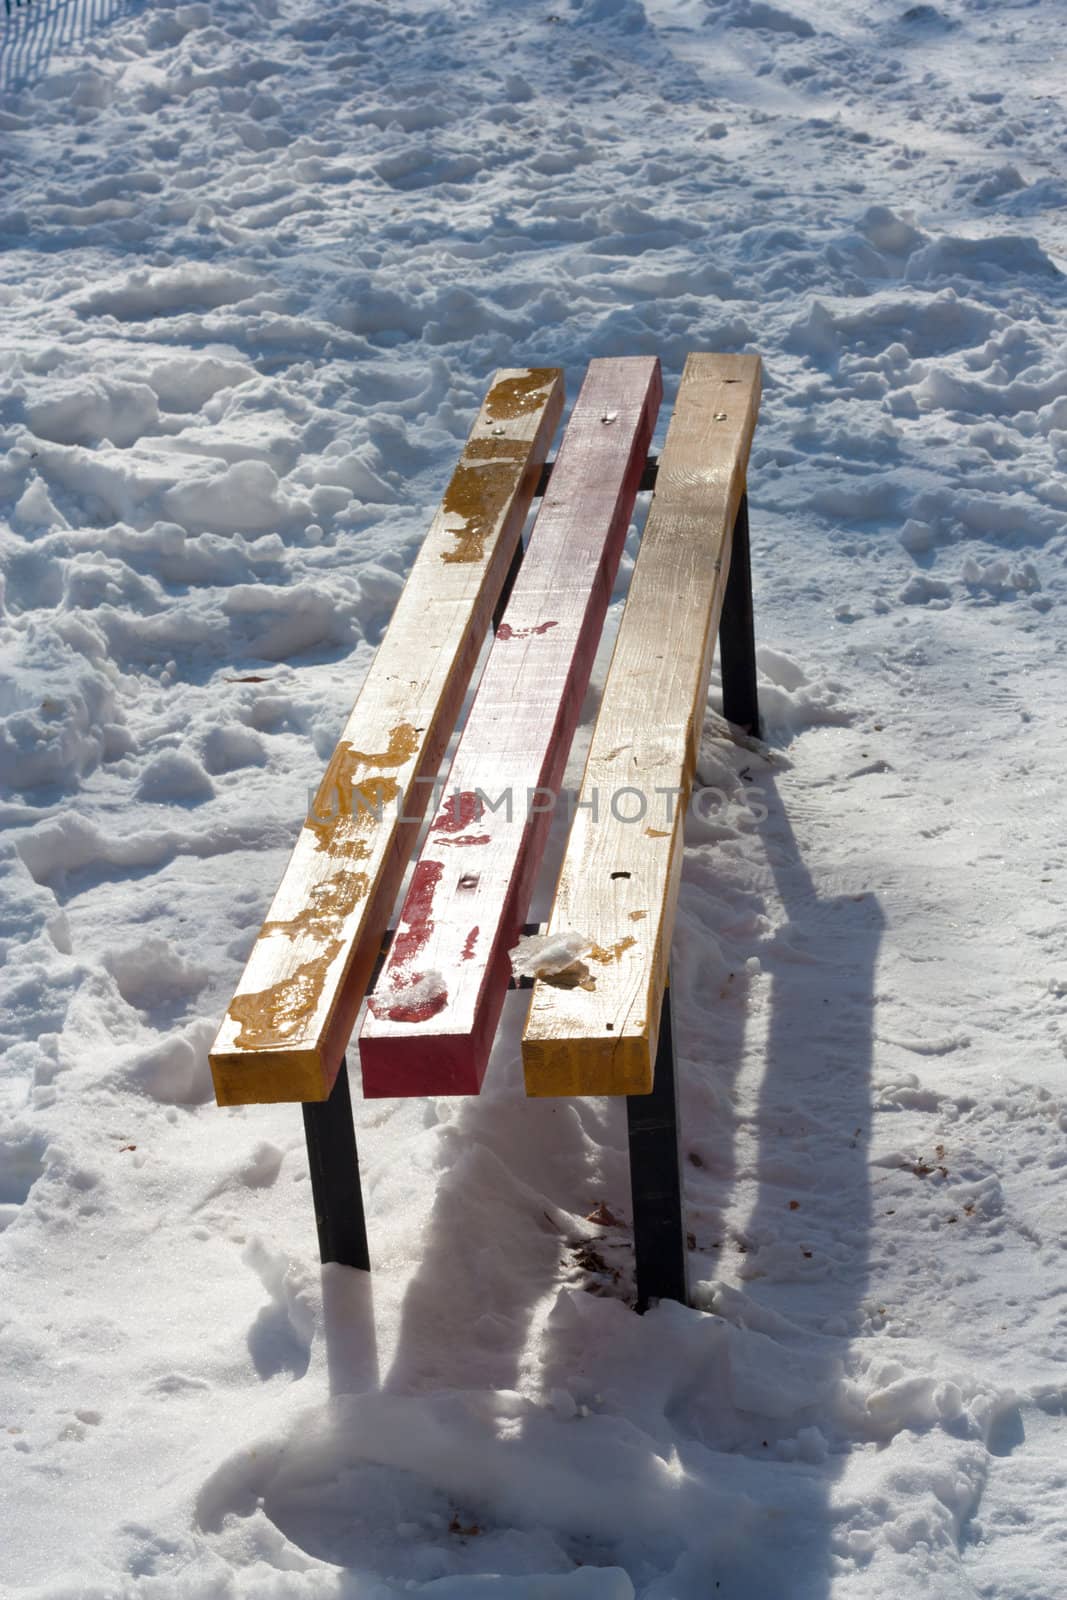 Bench in the Snow by schankz